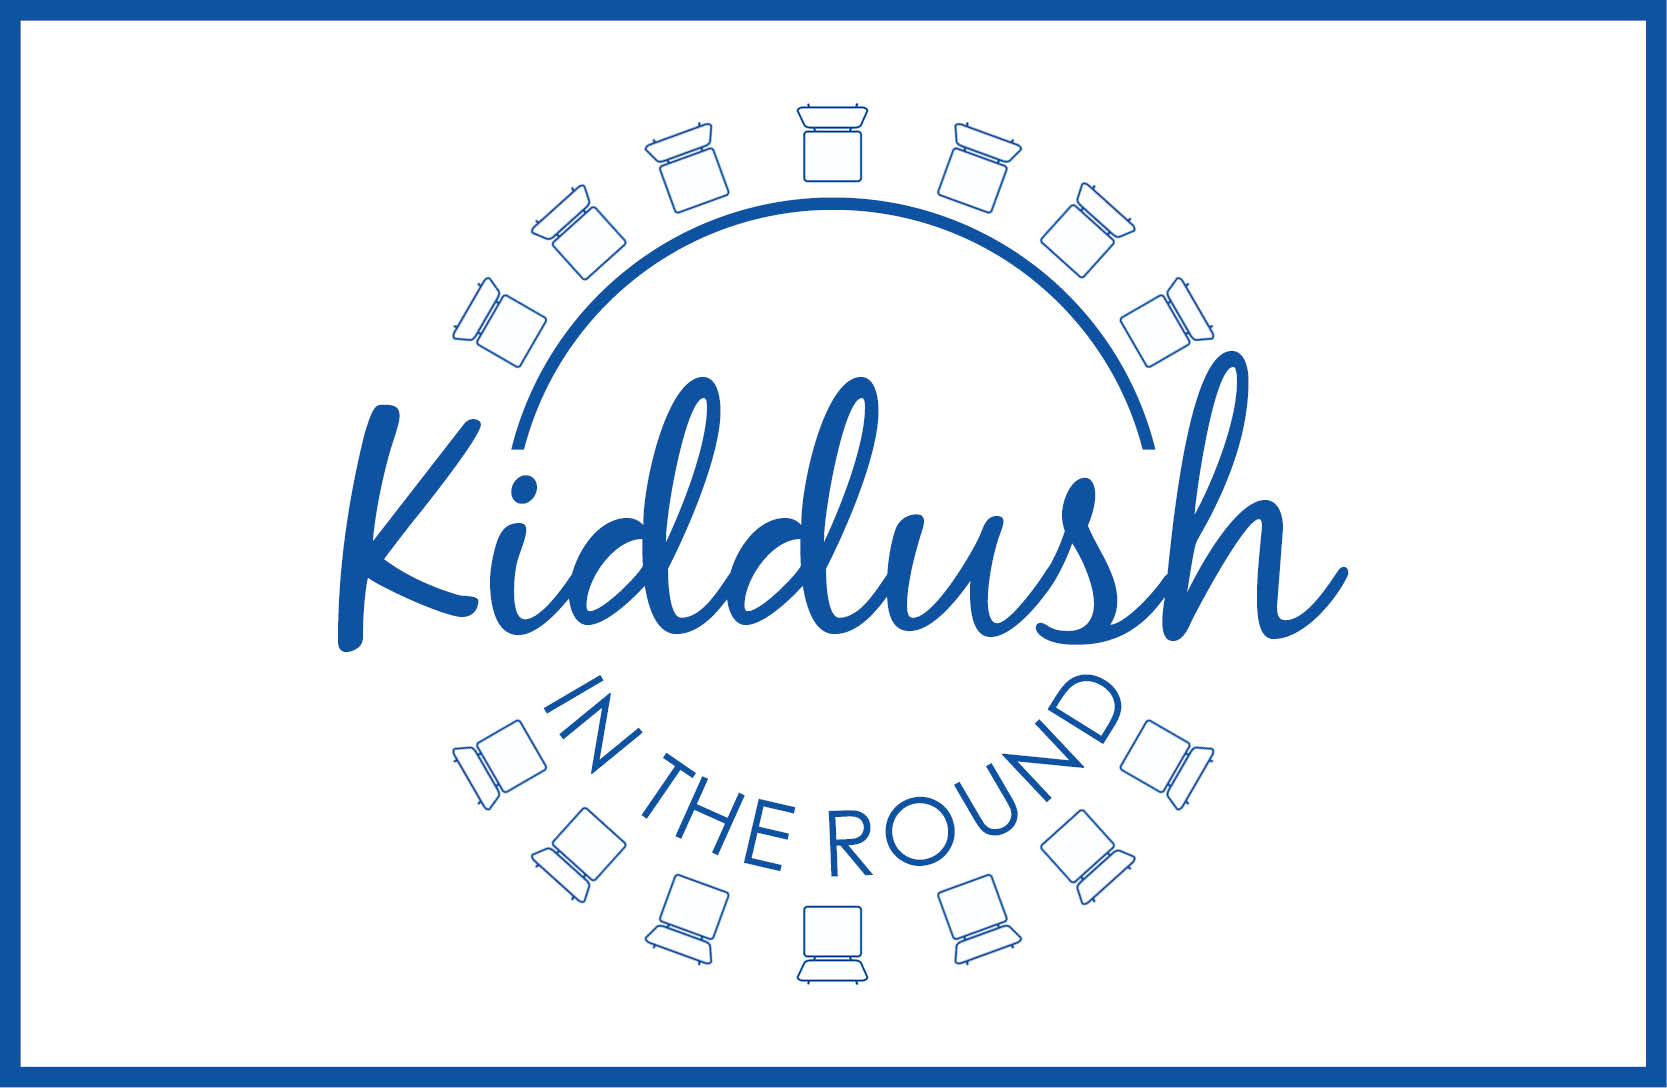 Kiddush in the Round